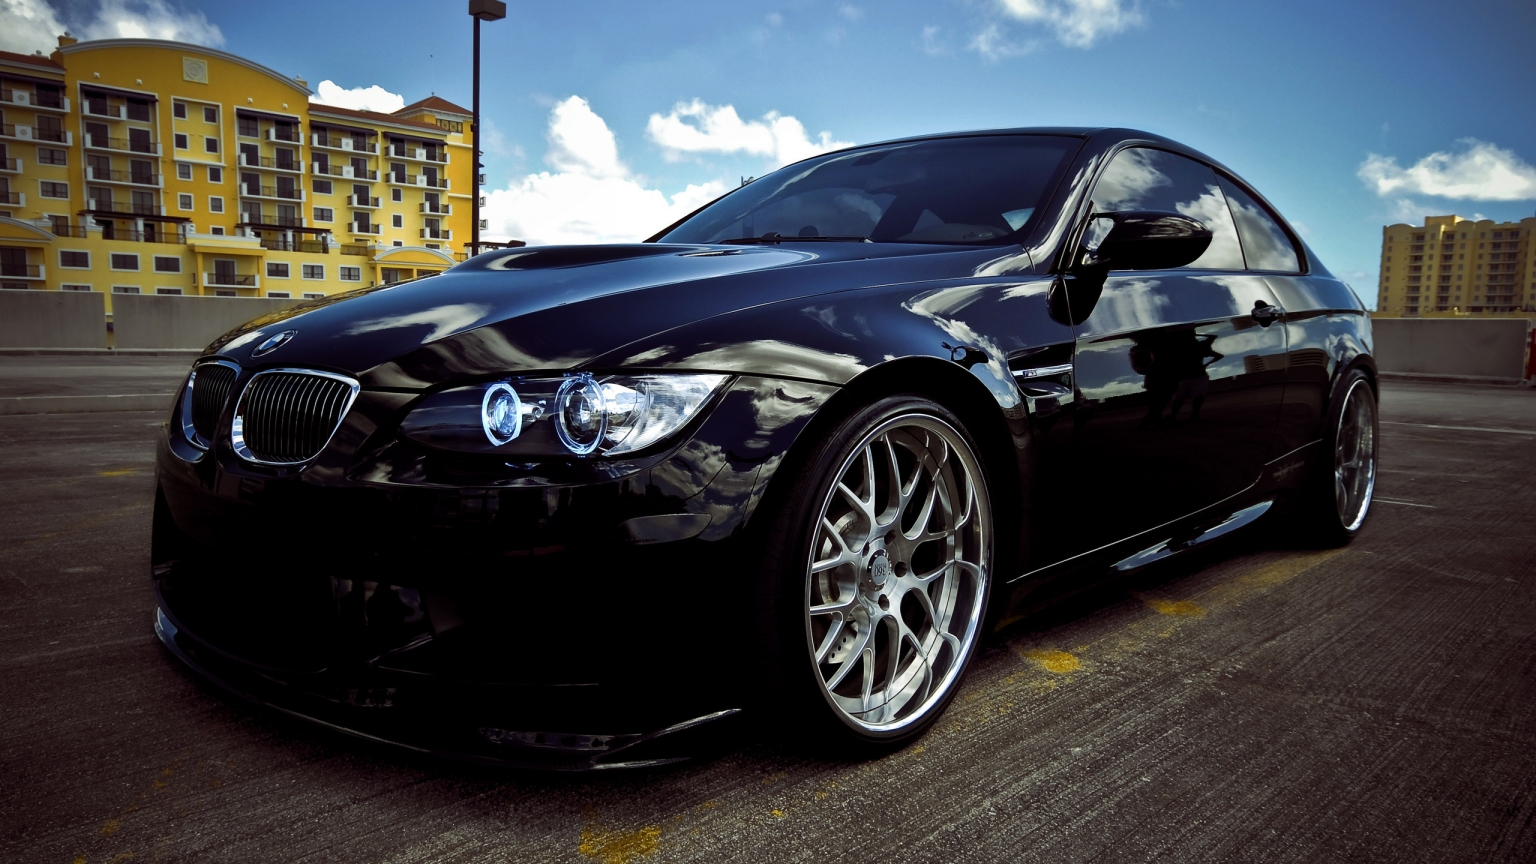 BMW M3 2010 Black for 1536 x 864 HDTV resolution